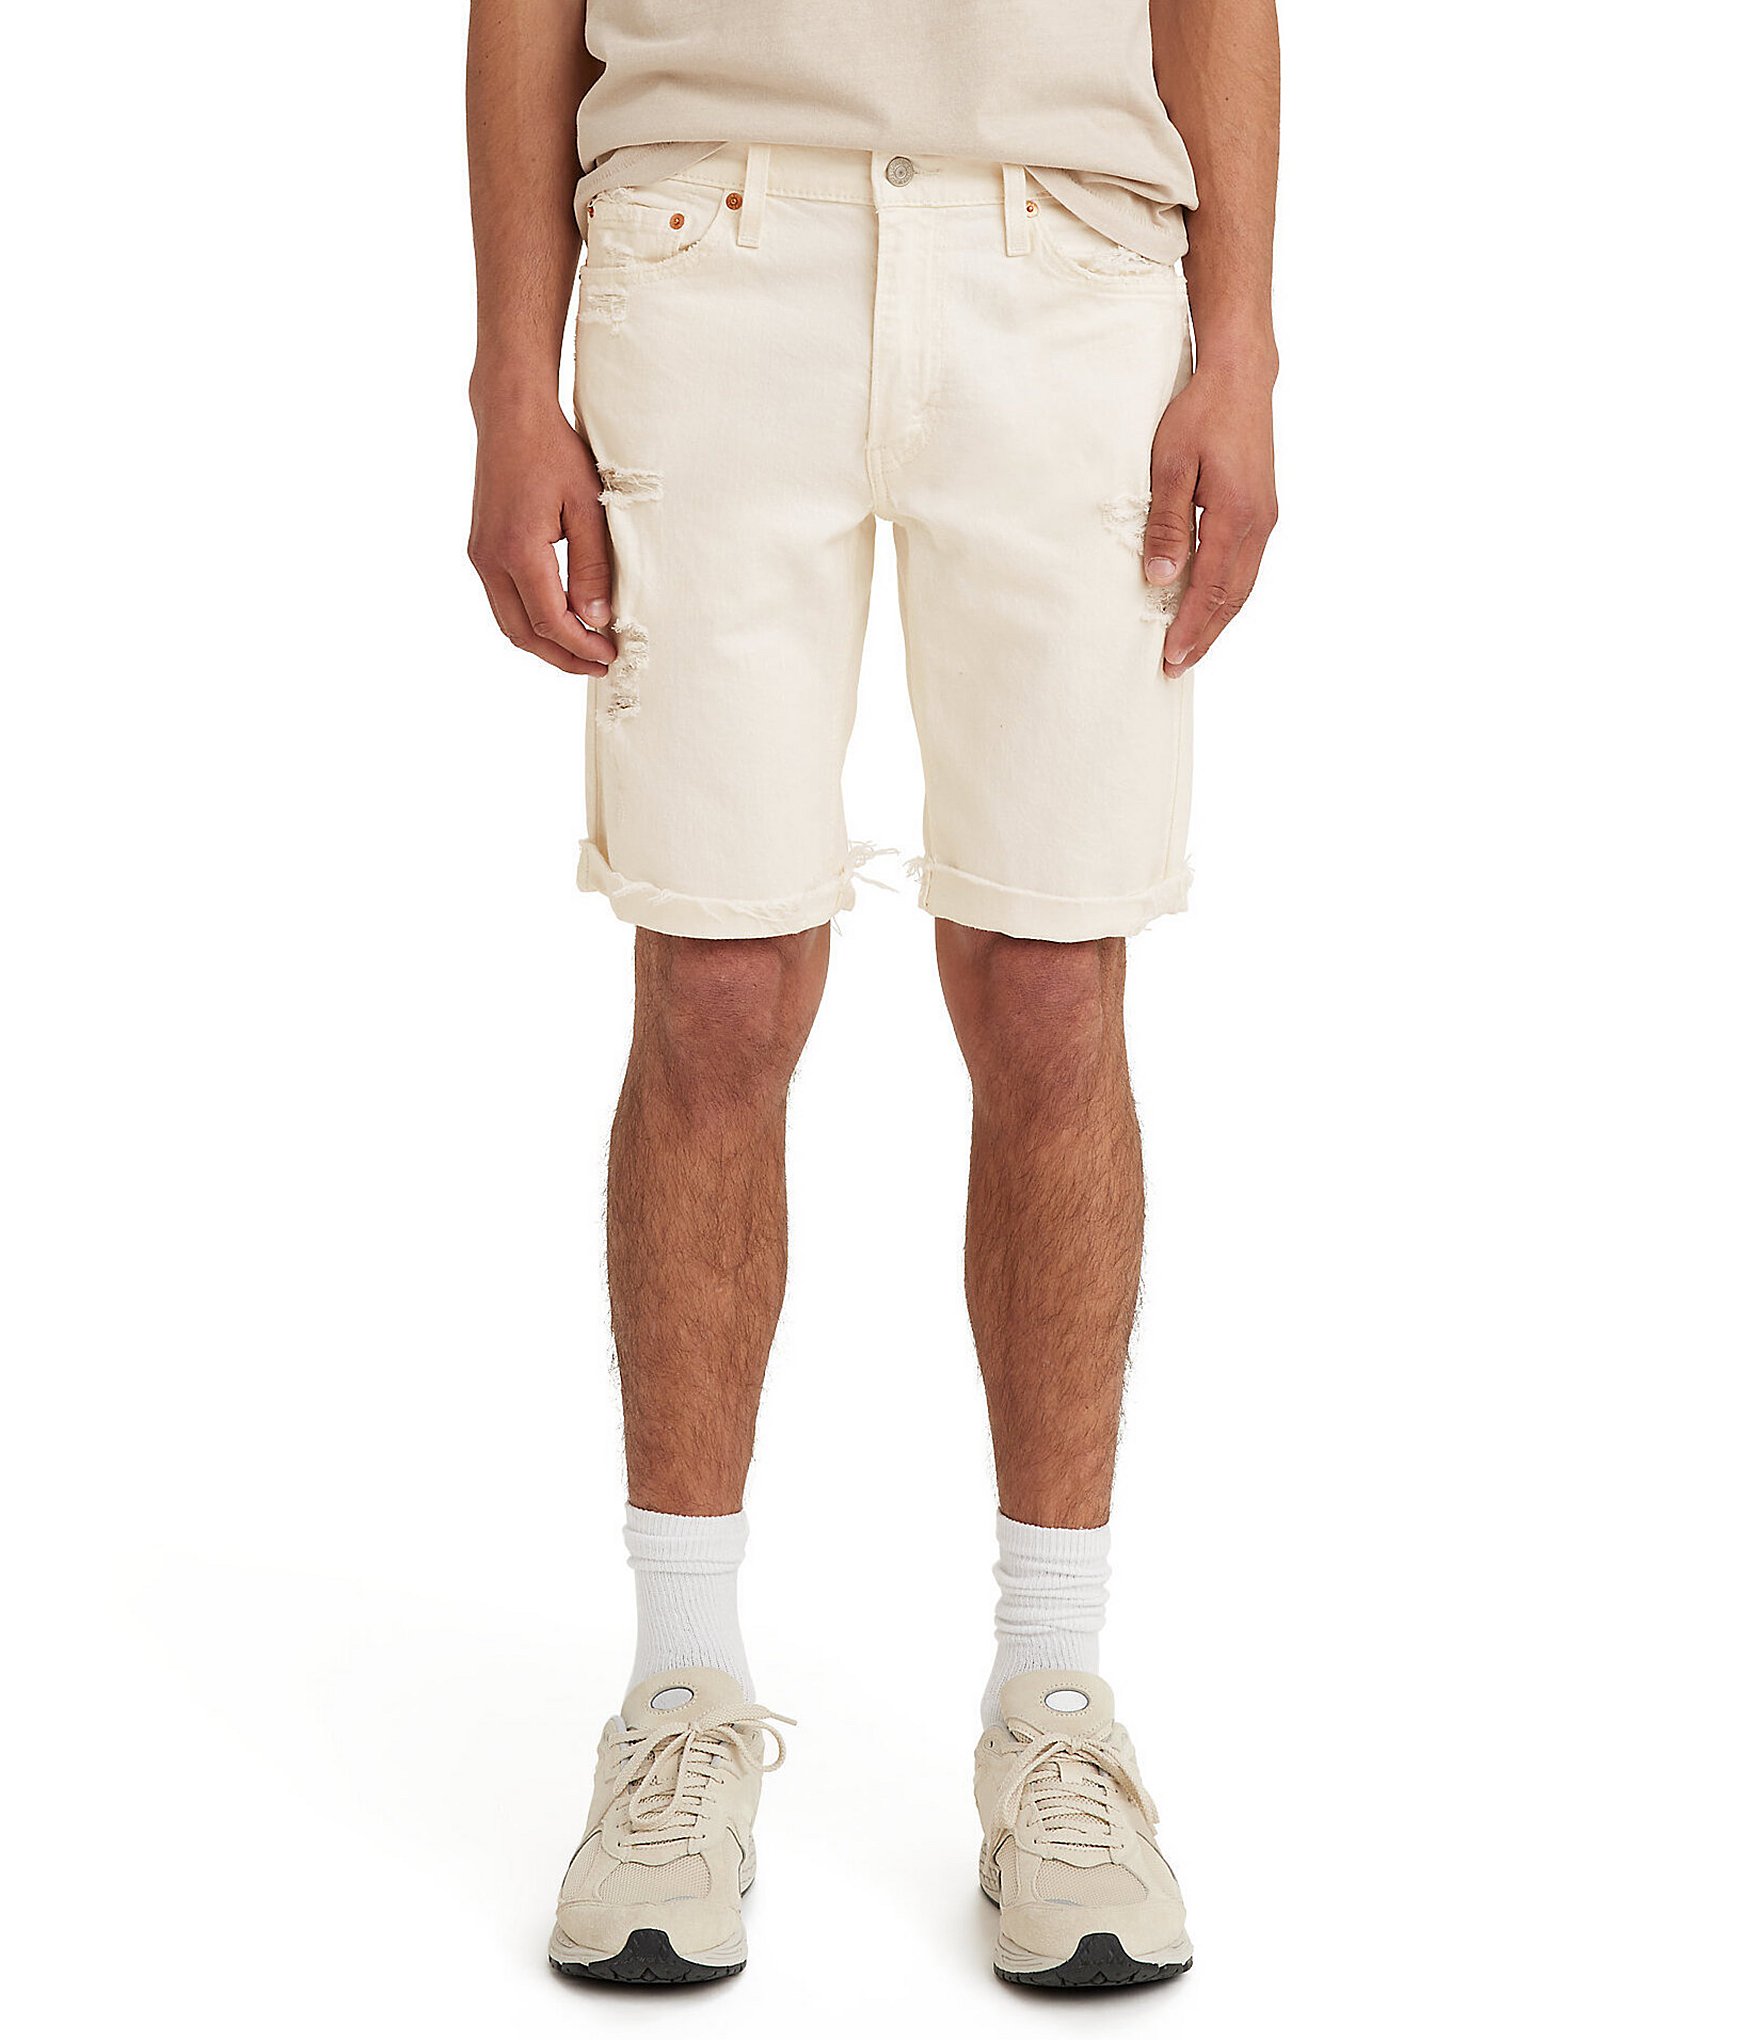 men's levi's: Men's Shorts | Dillard's